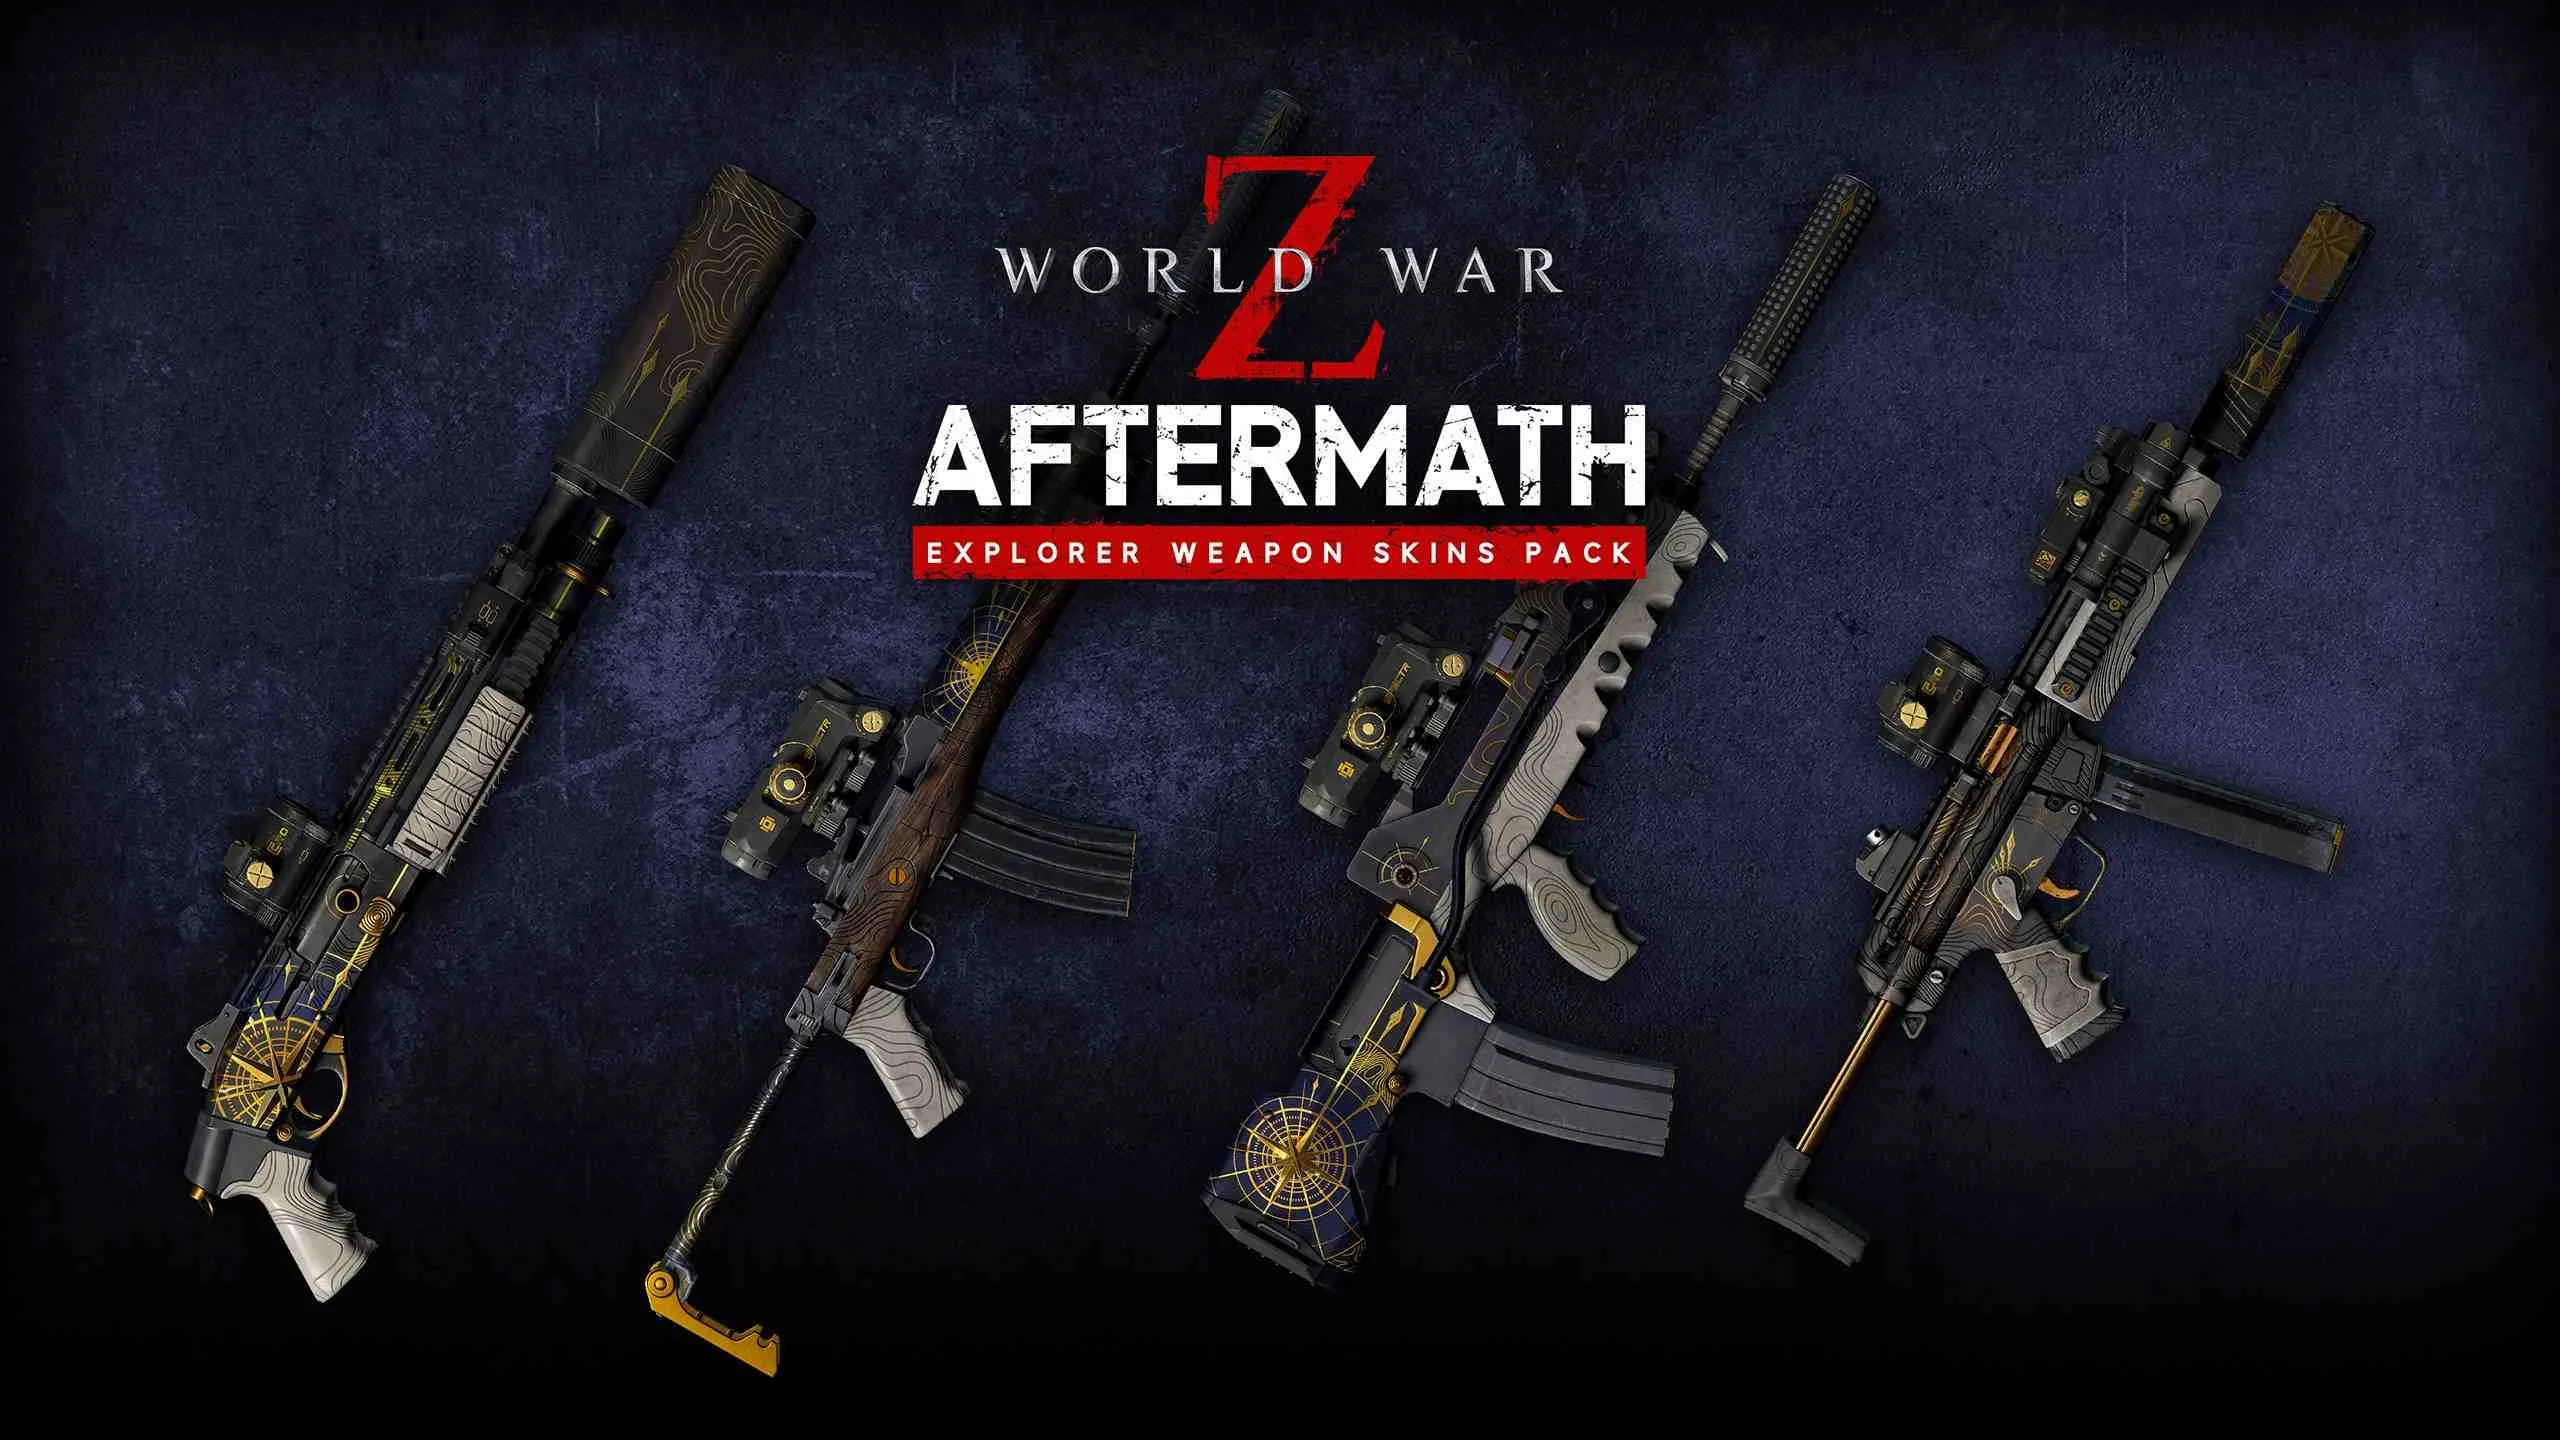 Is World War Z: Aftermath worth buying?